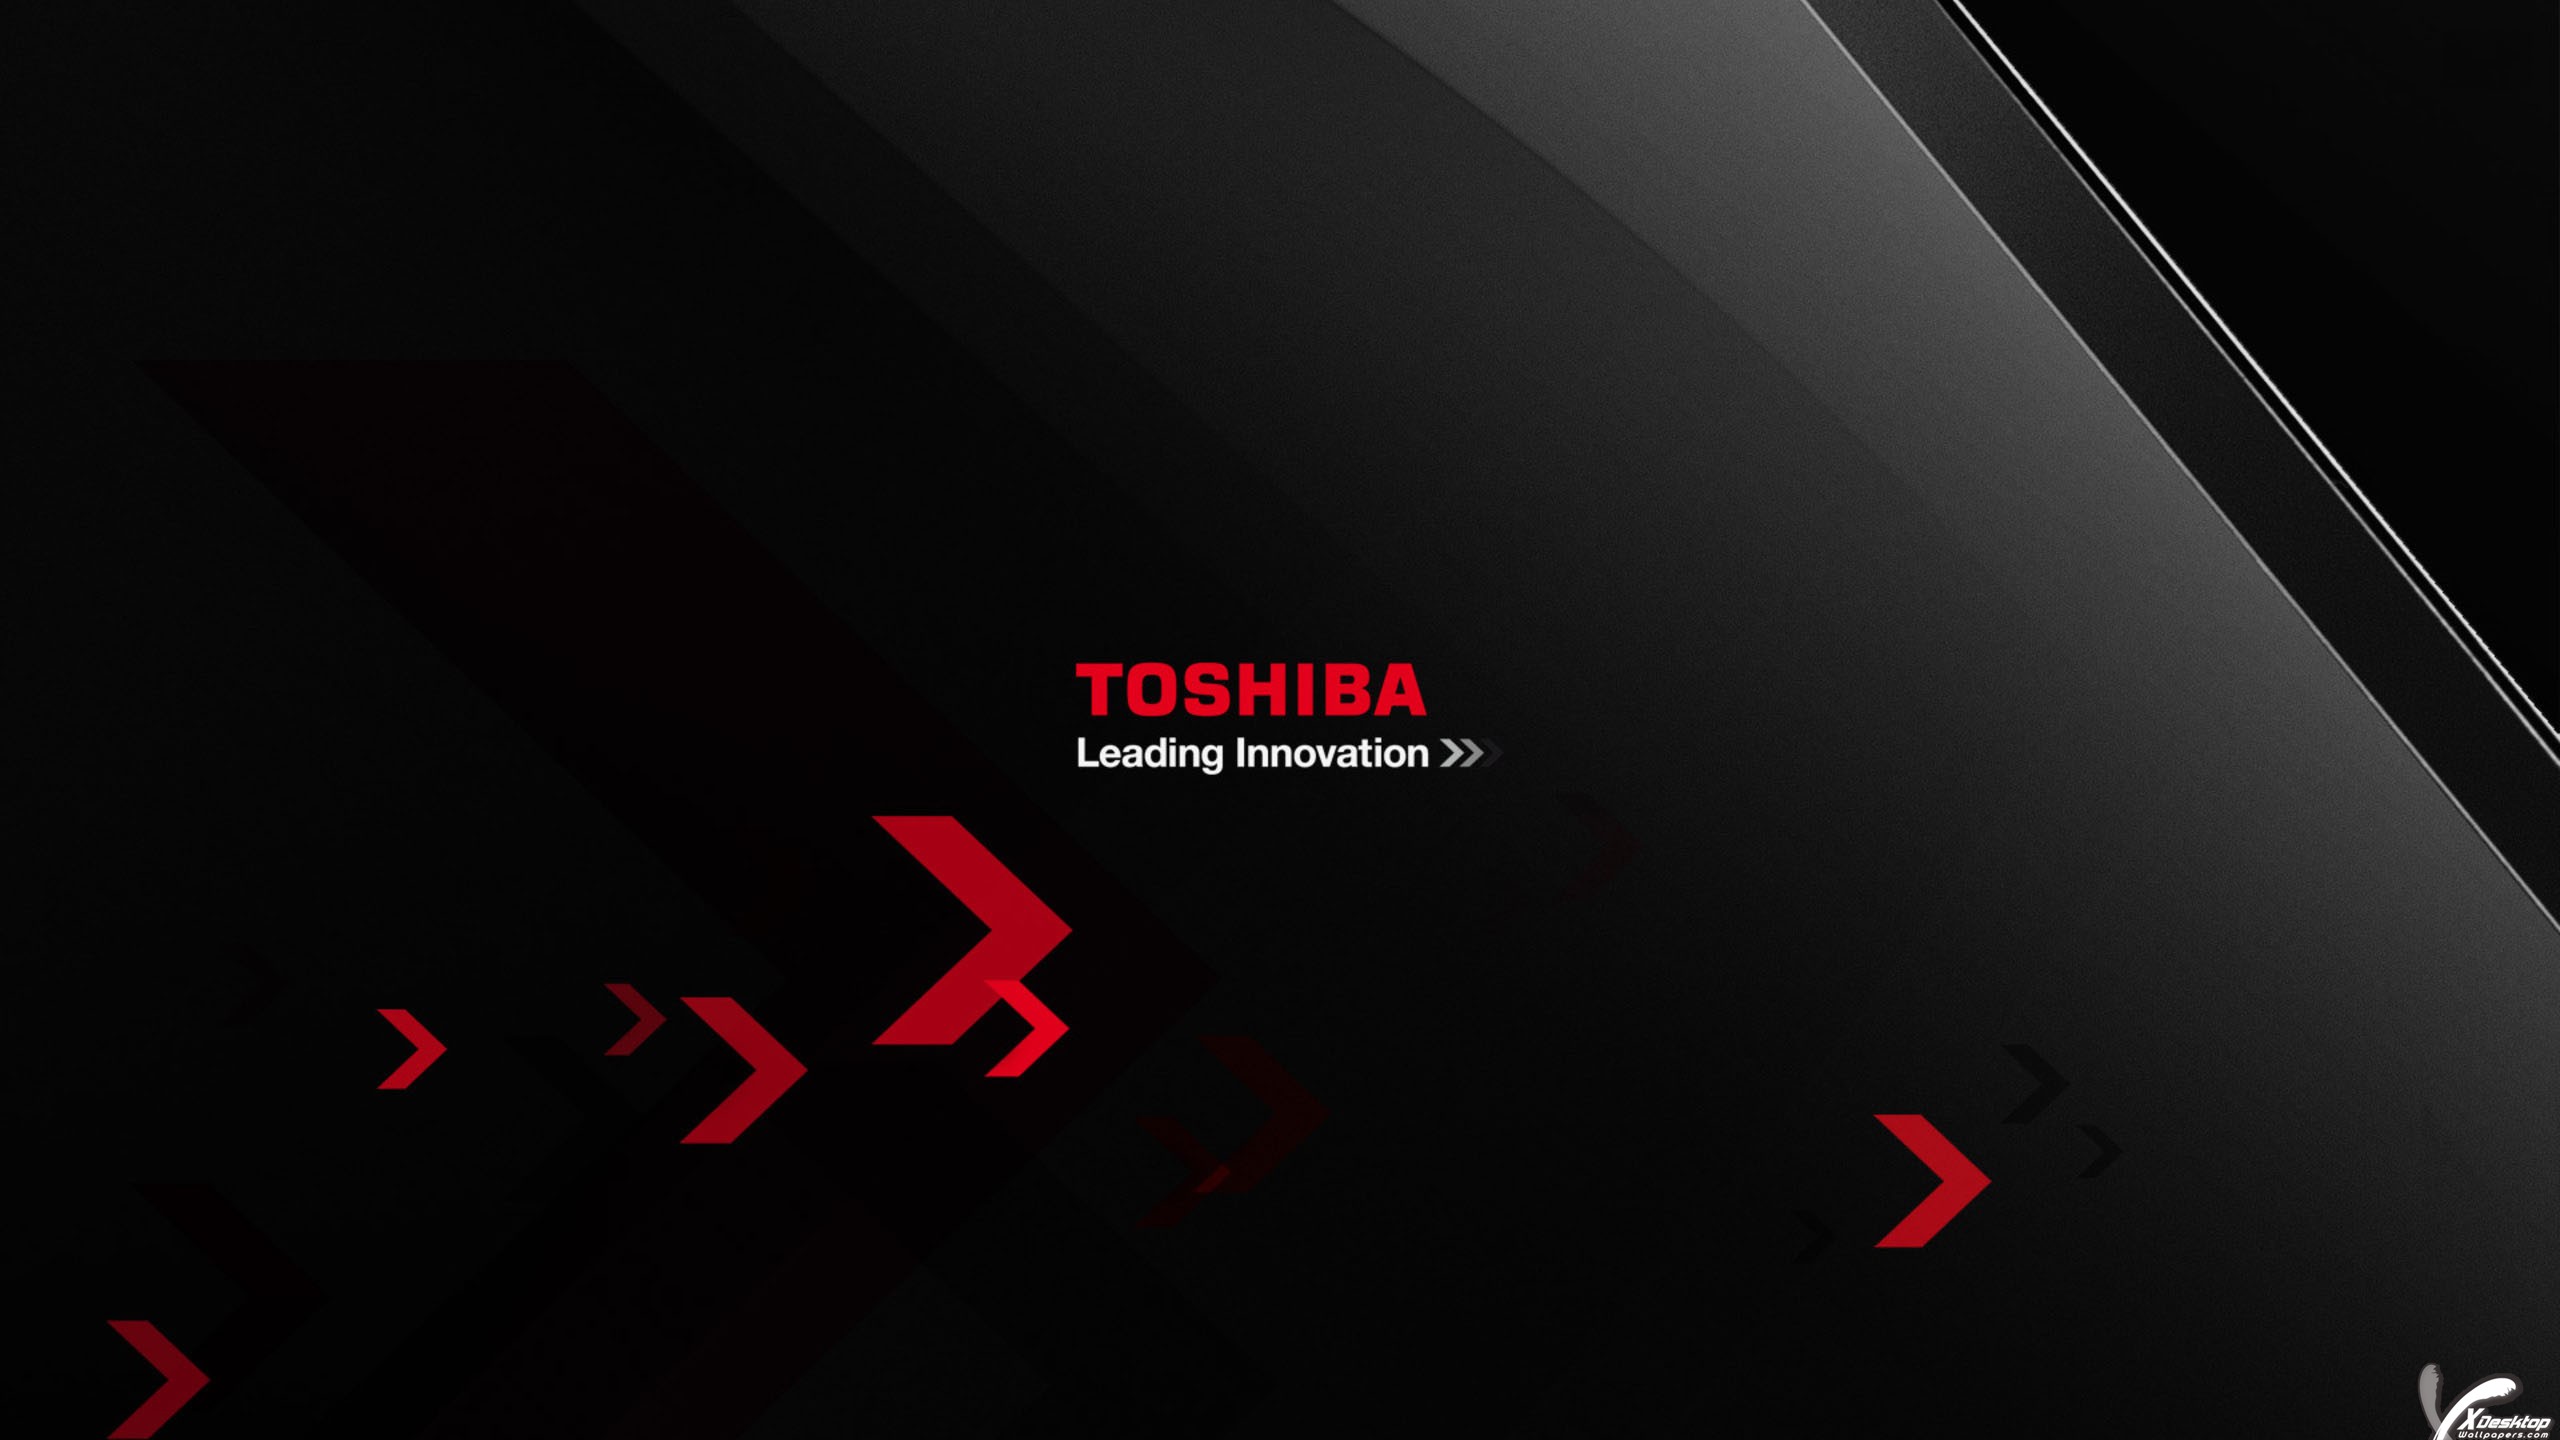 Logo On Black Backgroung Of Toshiba Leading Innovation Wallpaper